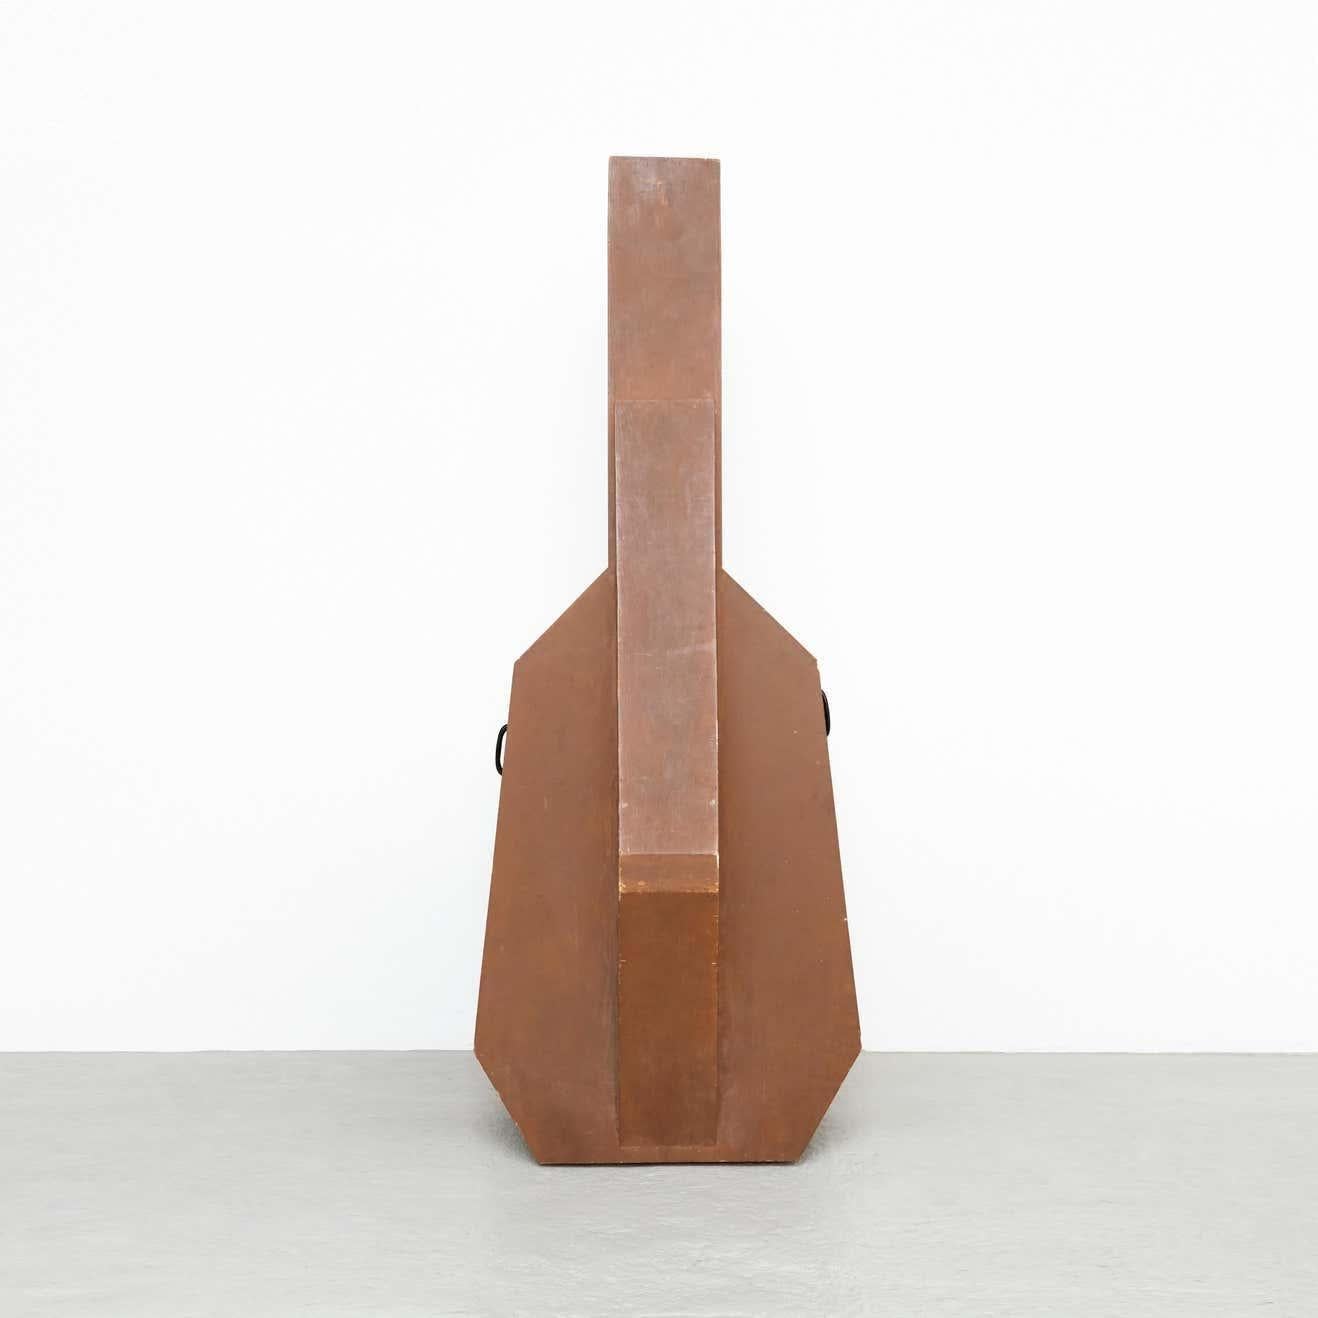 Mid-Century Modern Sandro's Inri: a Contemporary Minimalist Sculpture and Objét Trouvé, 2017 For Sale